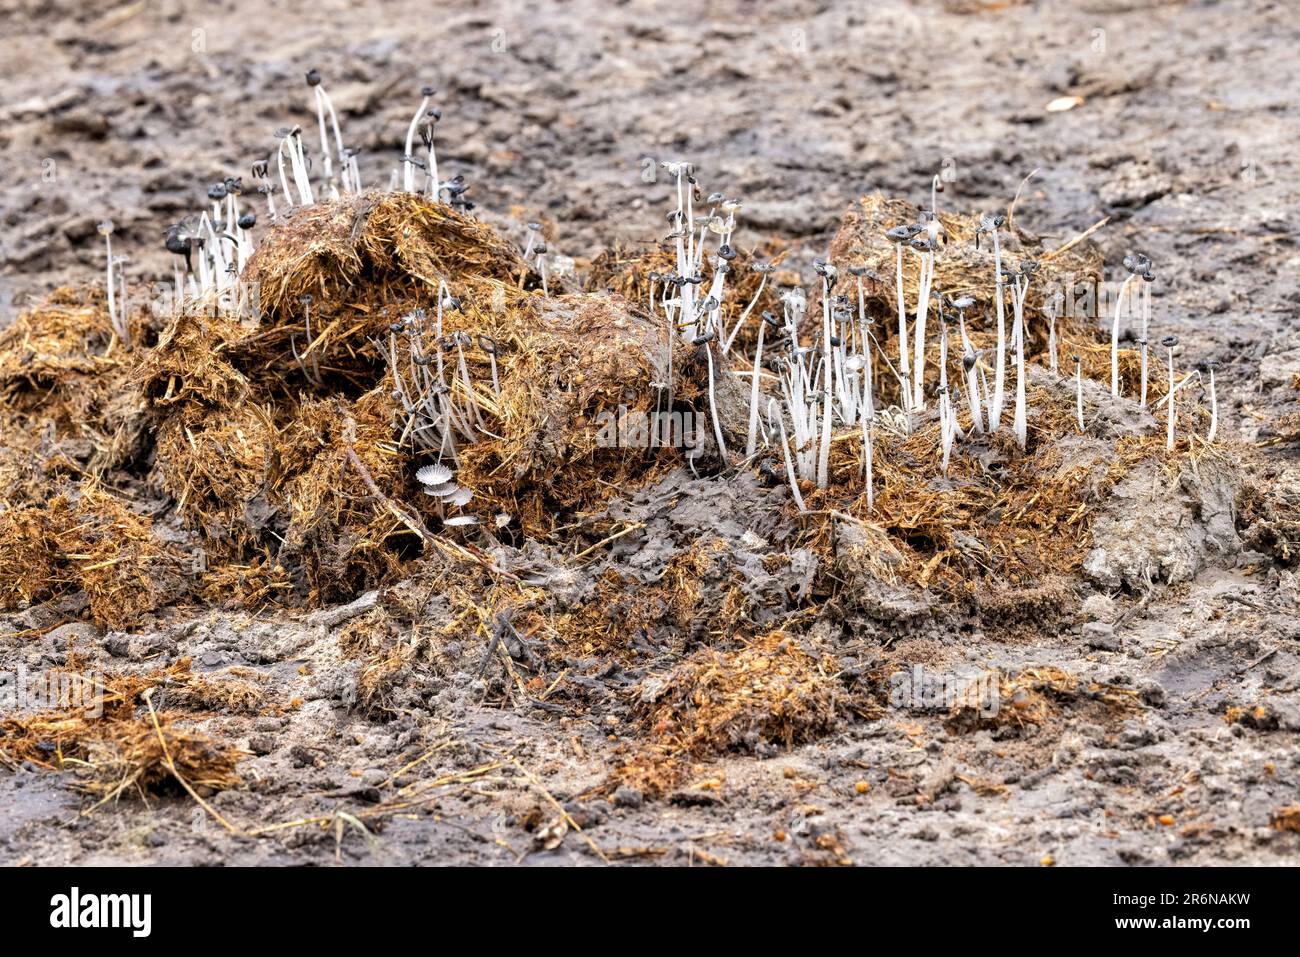 Fungi growing out of elephant dung - Onguma Game Reserve, Namibia, Africa Stock Photo